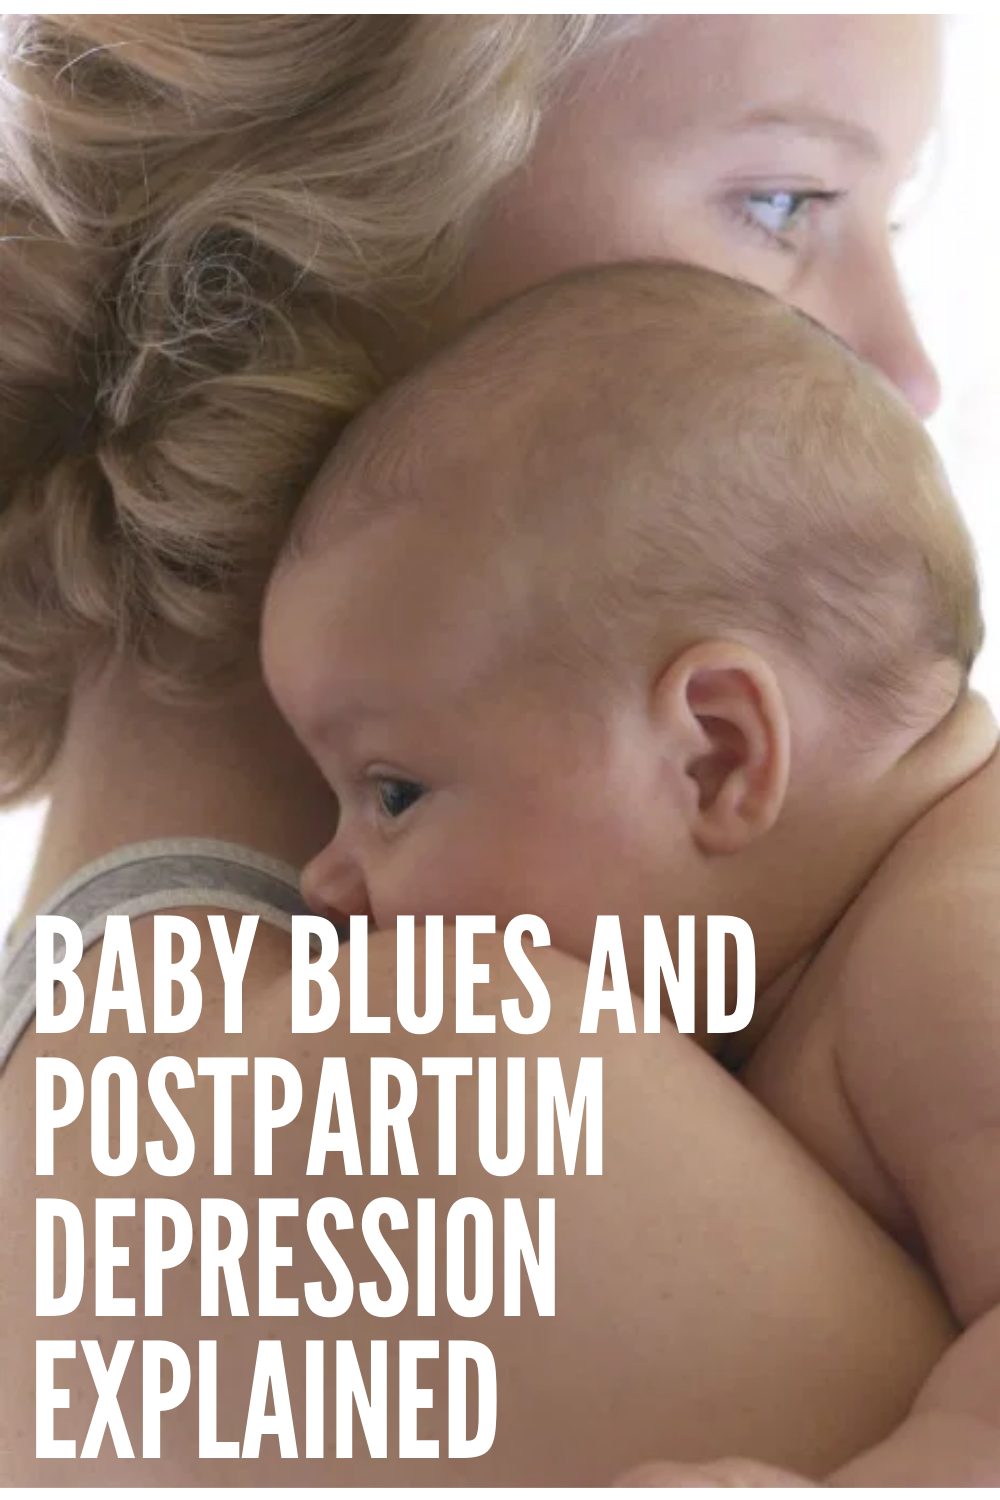 Postpartum depression: main symptoms, causes and treatments